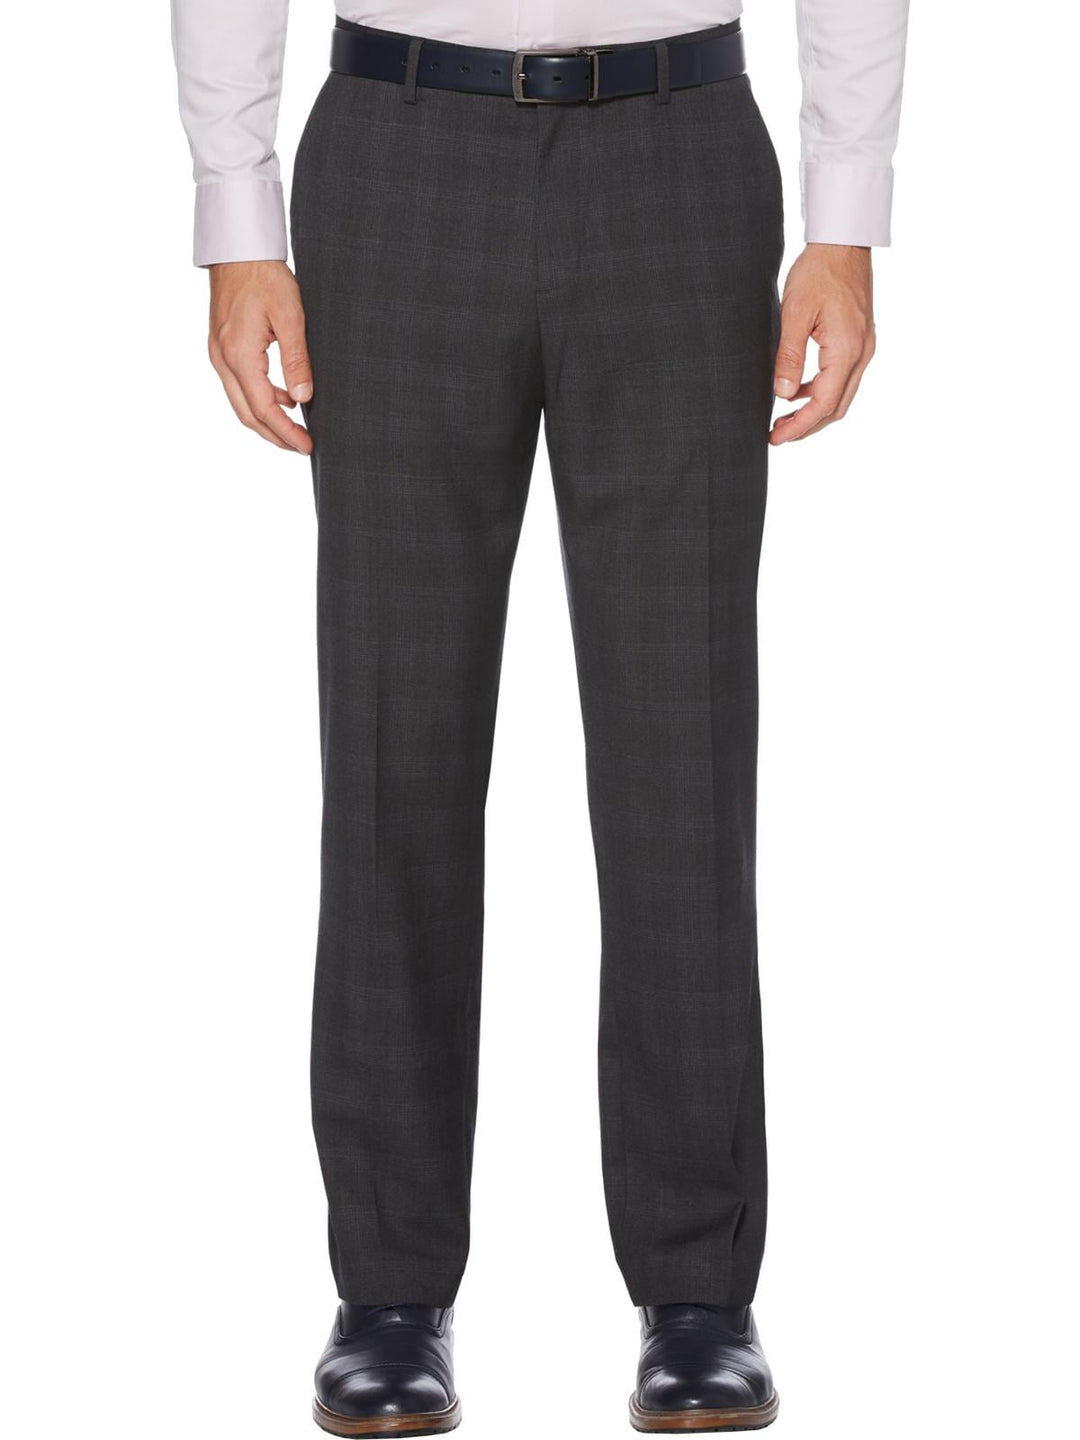 Perry Ellis Portfolio Men's Modern Fit Windowpane Plaid Dress Pants Gray Size 38X32